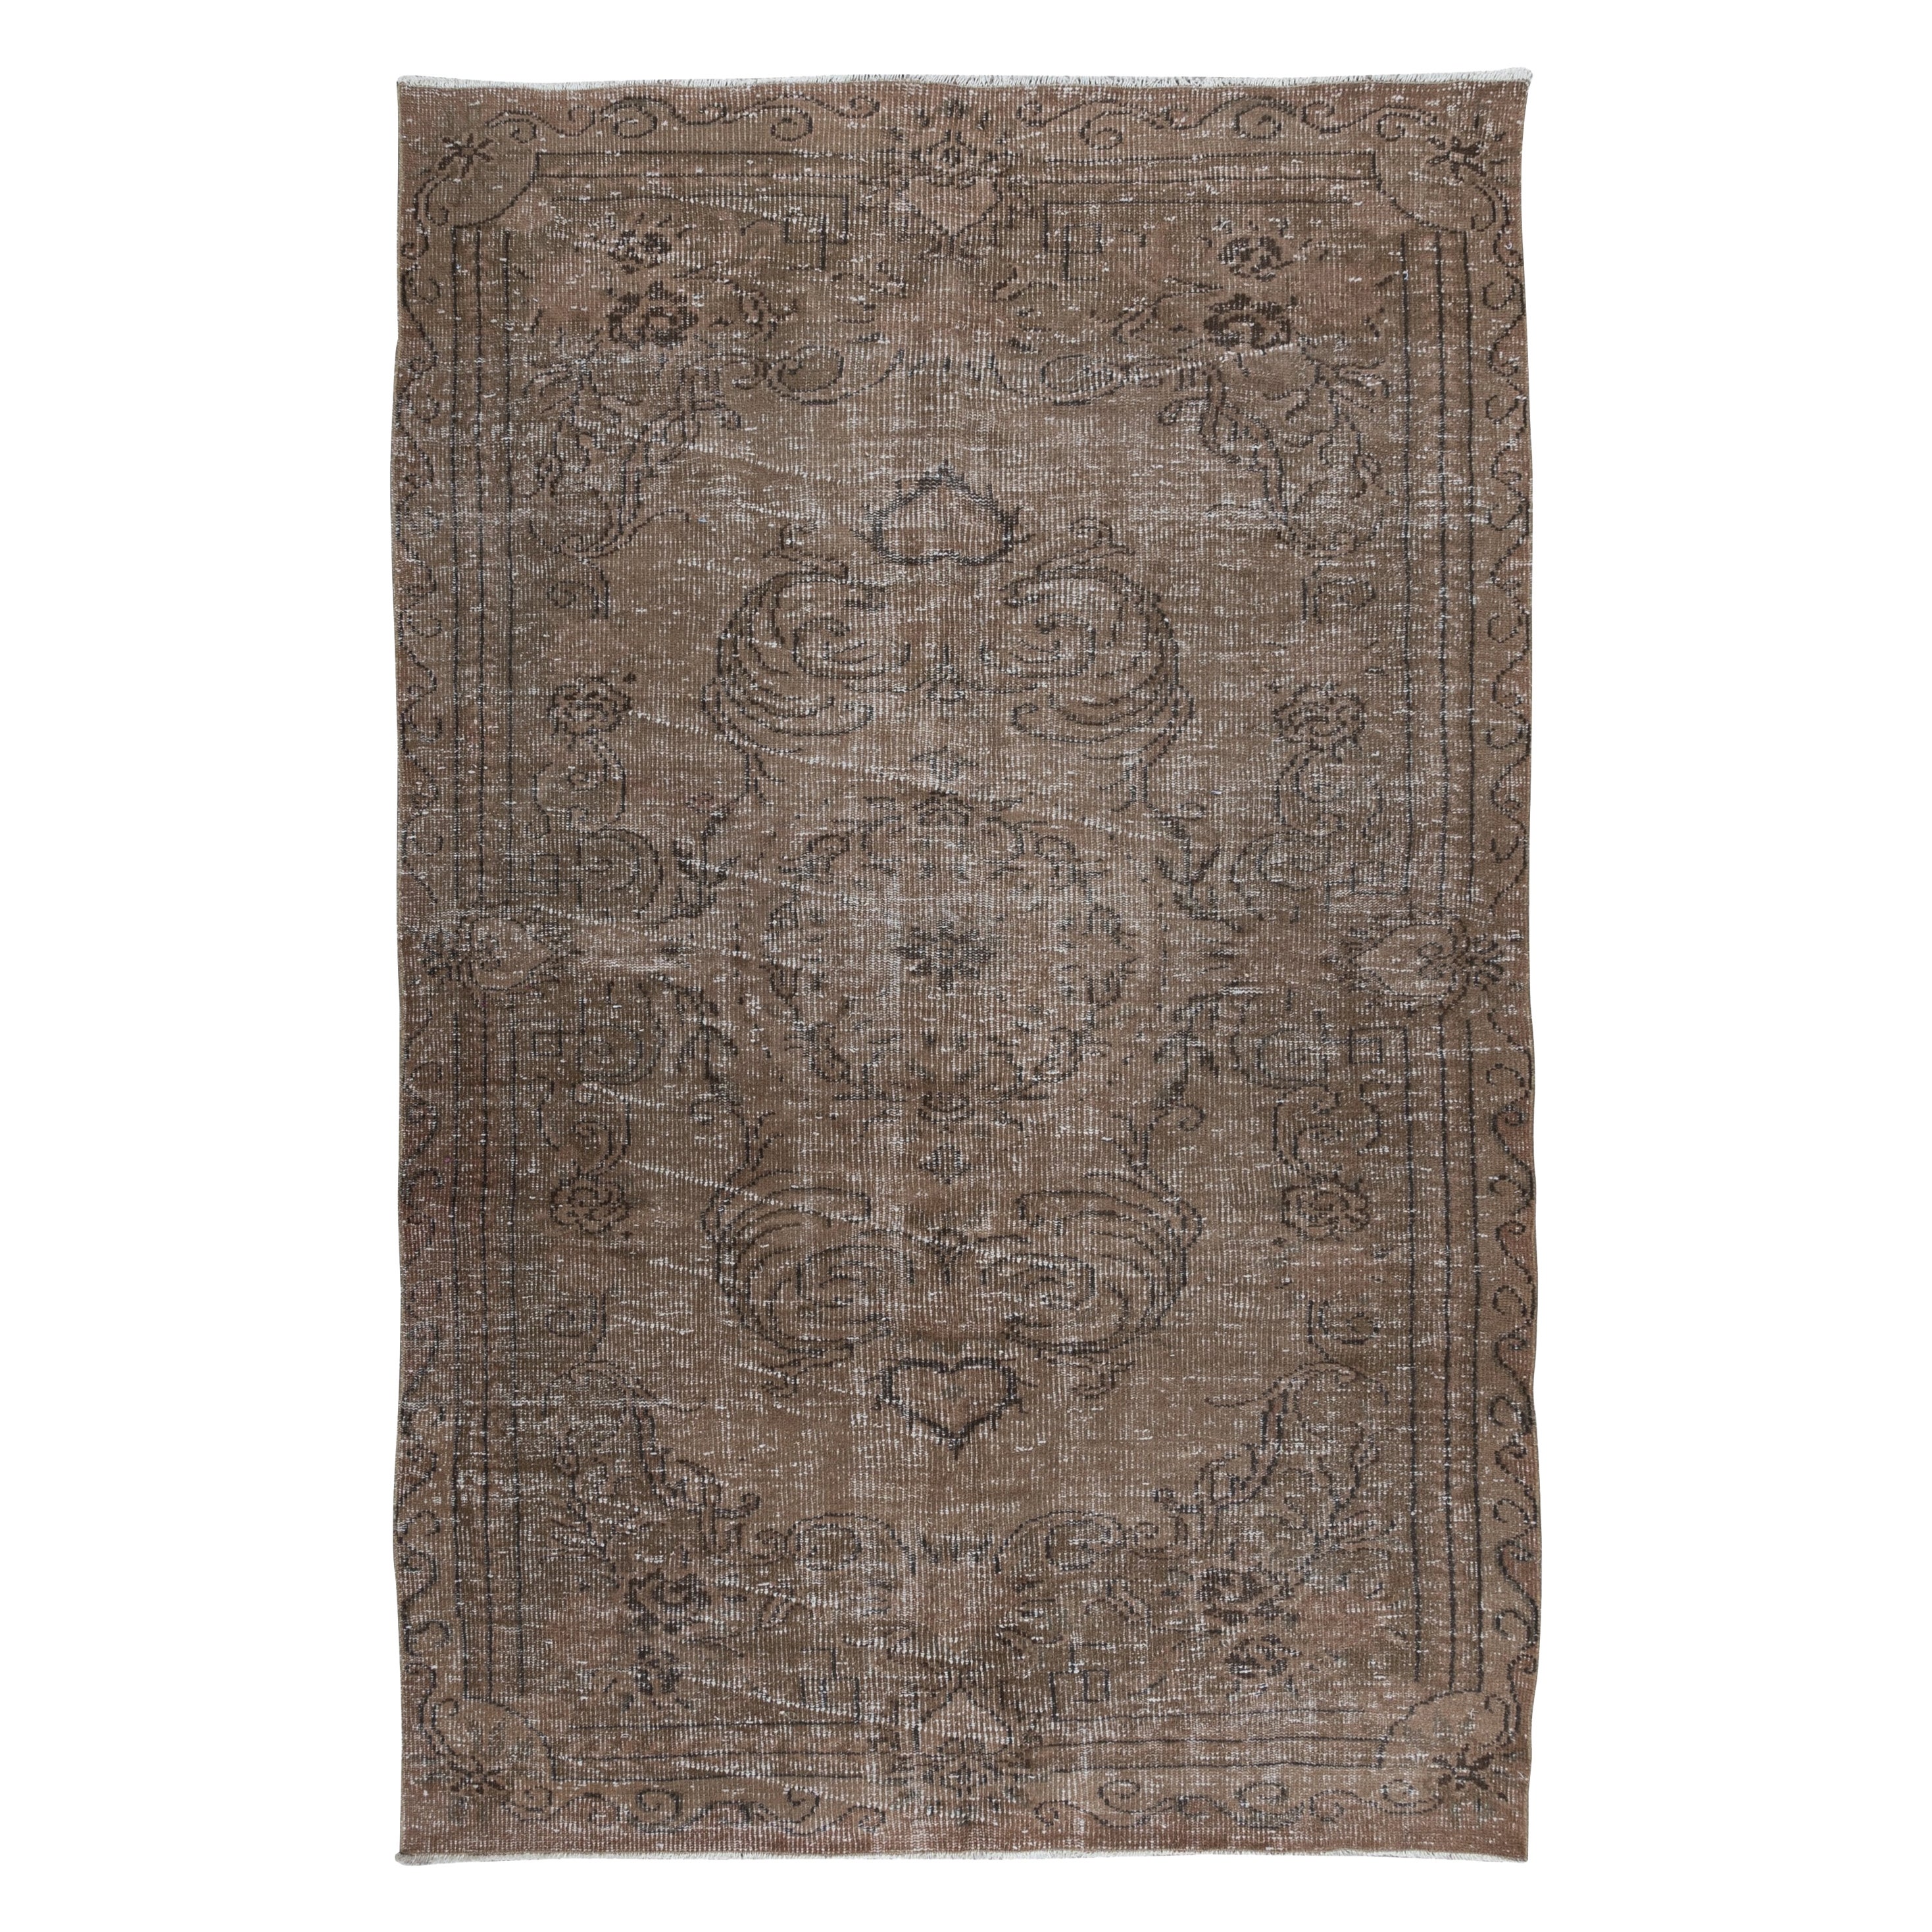 5.6x8.6 Ft Handmade Rug with Medallion Design in Brown, Vintage Turkish Carpet For Sale